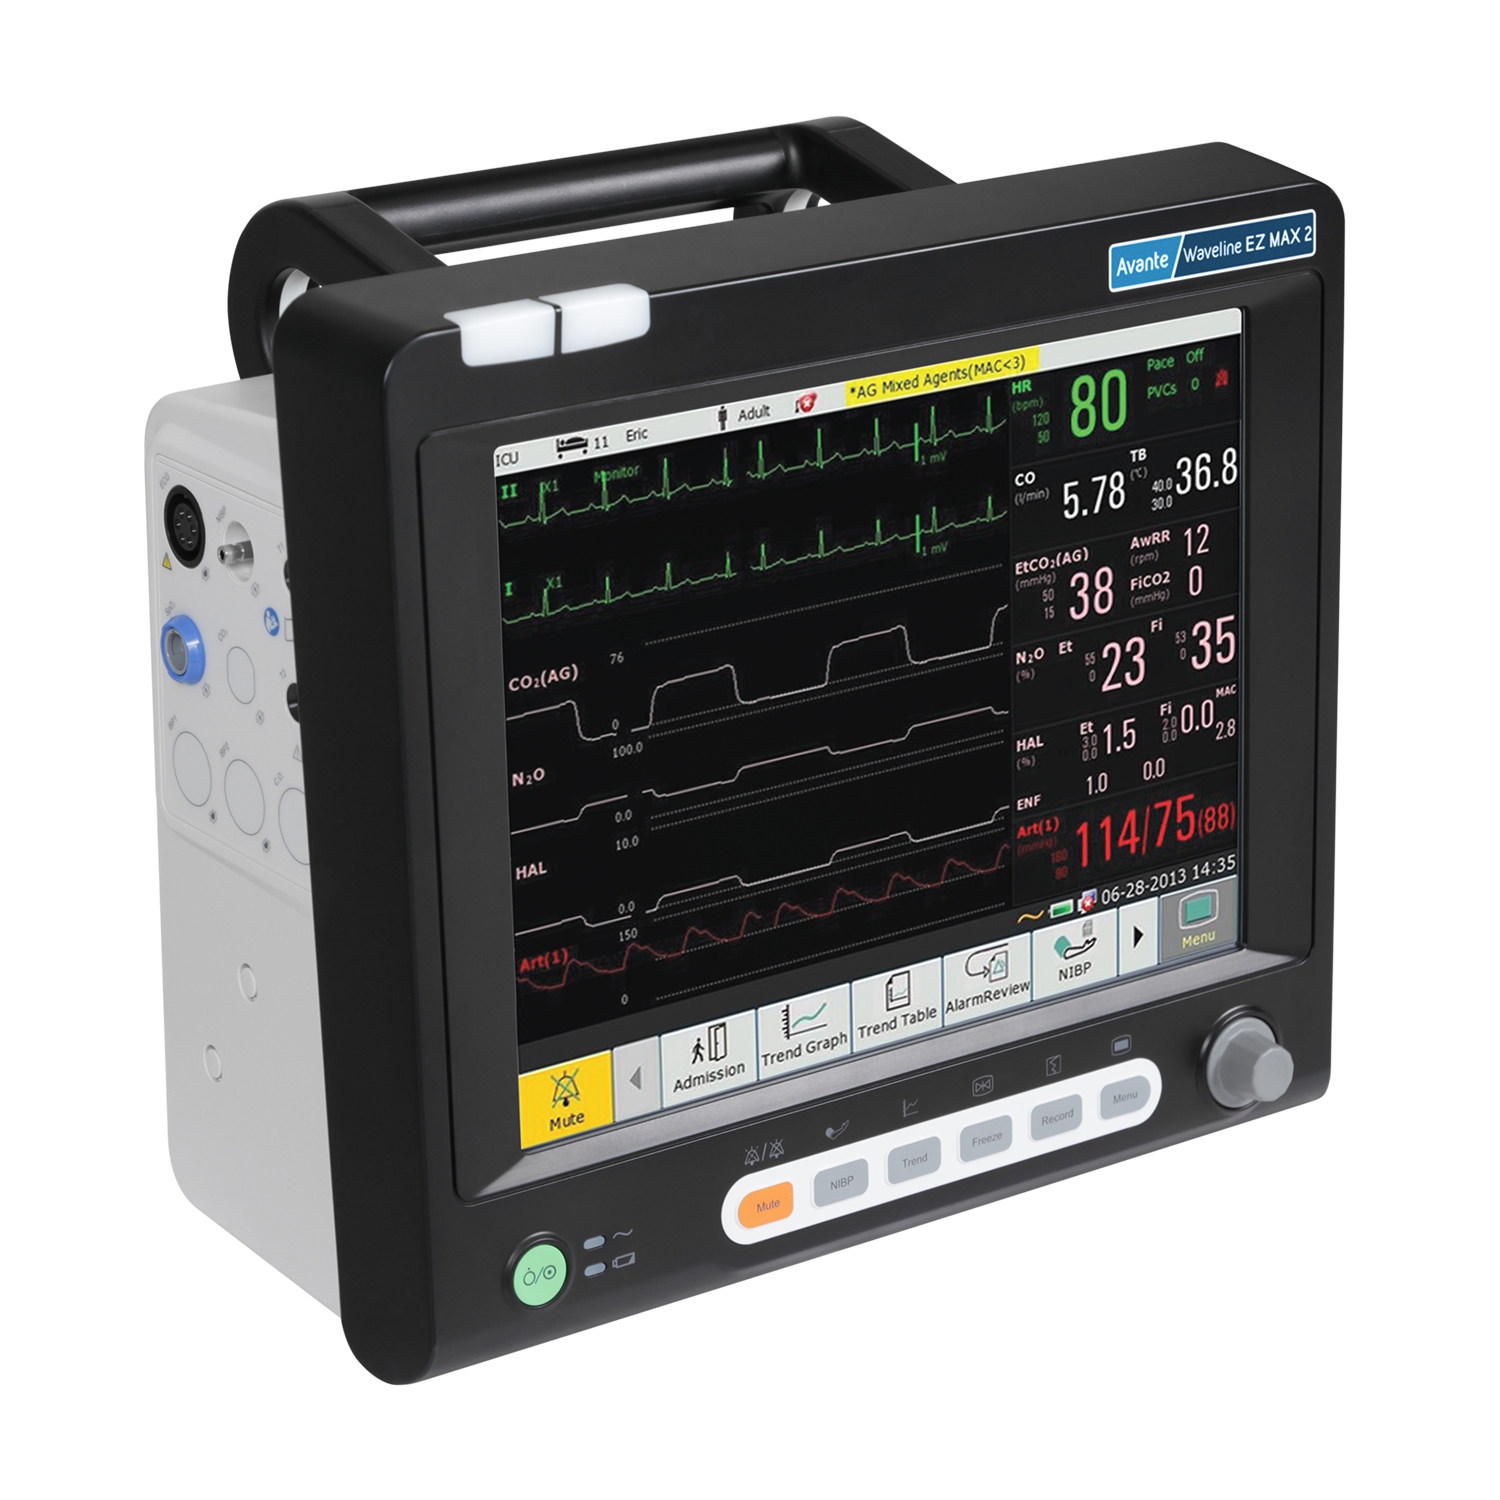 Avante Waveline EZ MAX 2 Patient Monitor